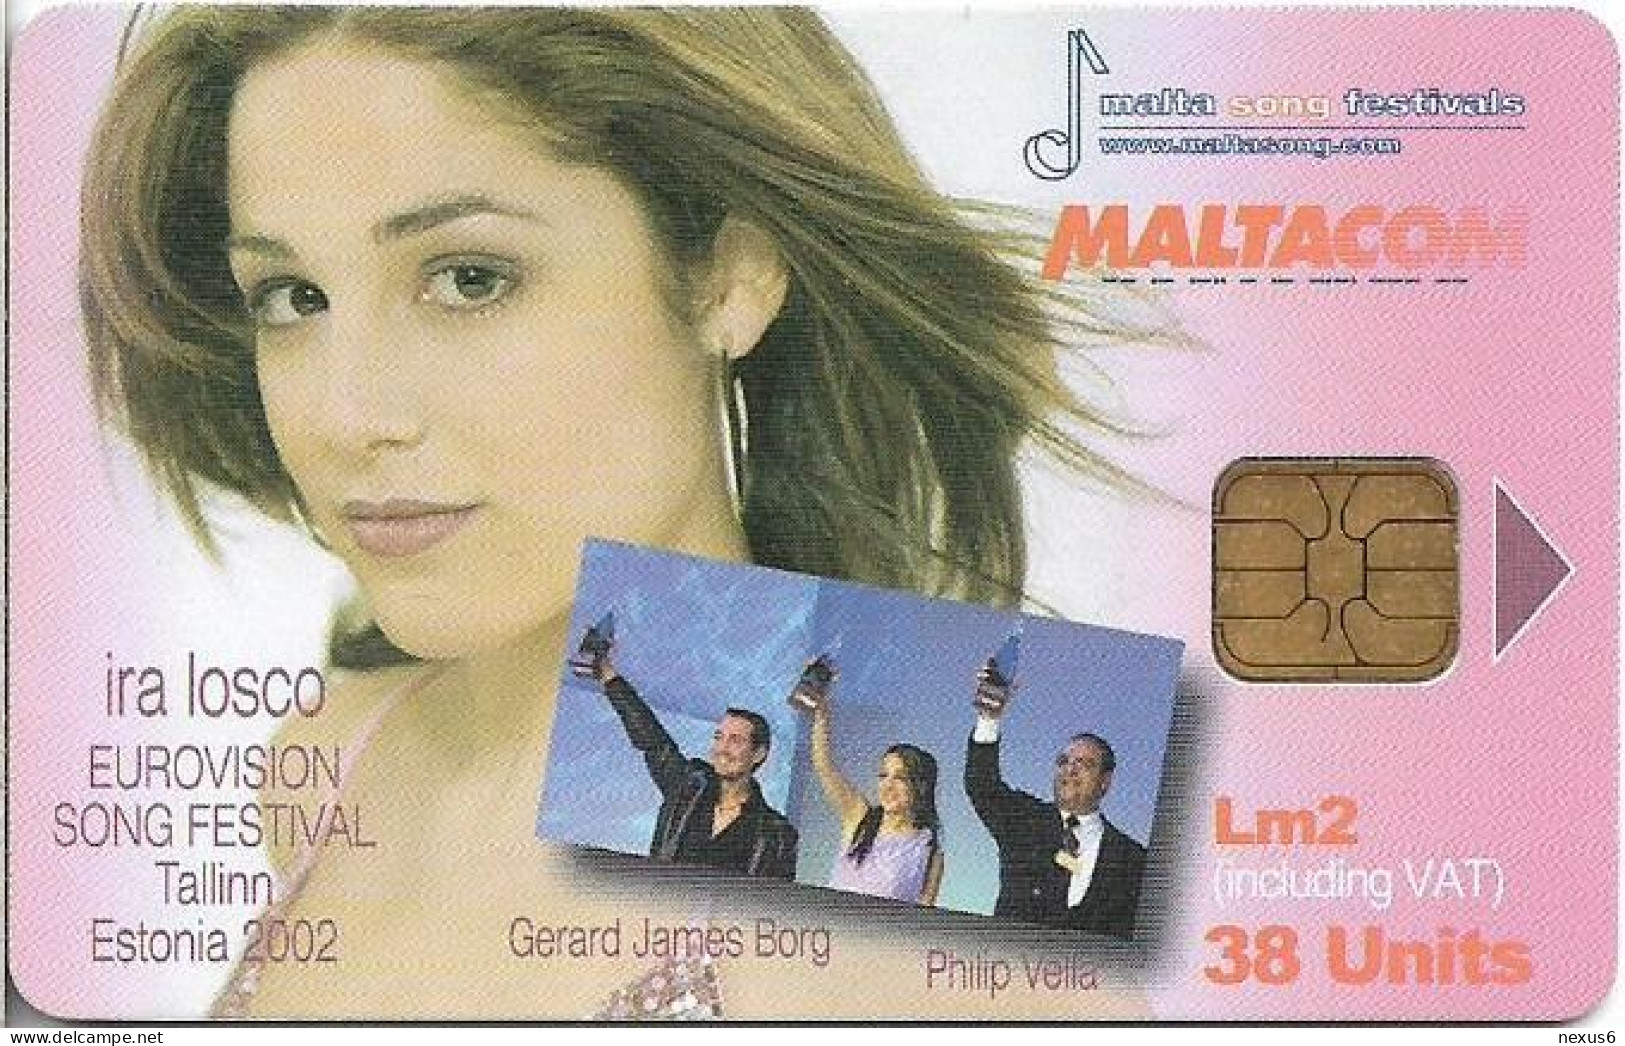 Malta - Maltacom - Ira Losco '7th Wonder', 05.2002, 38U, 15.000ex, Used - Malte